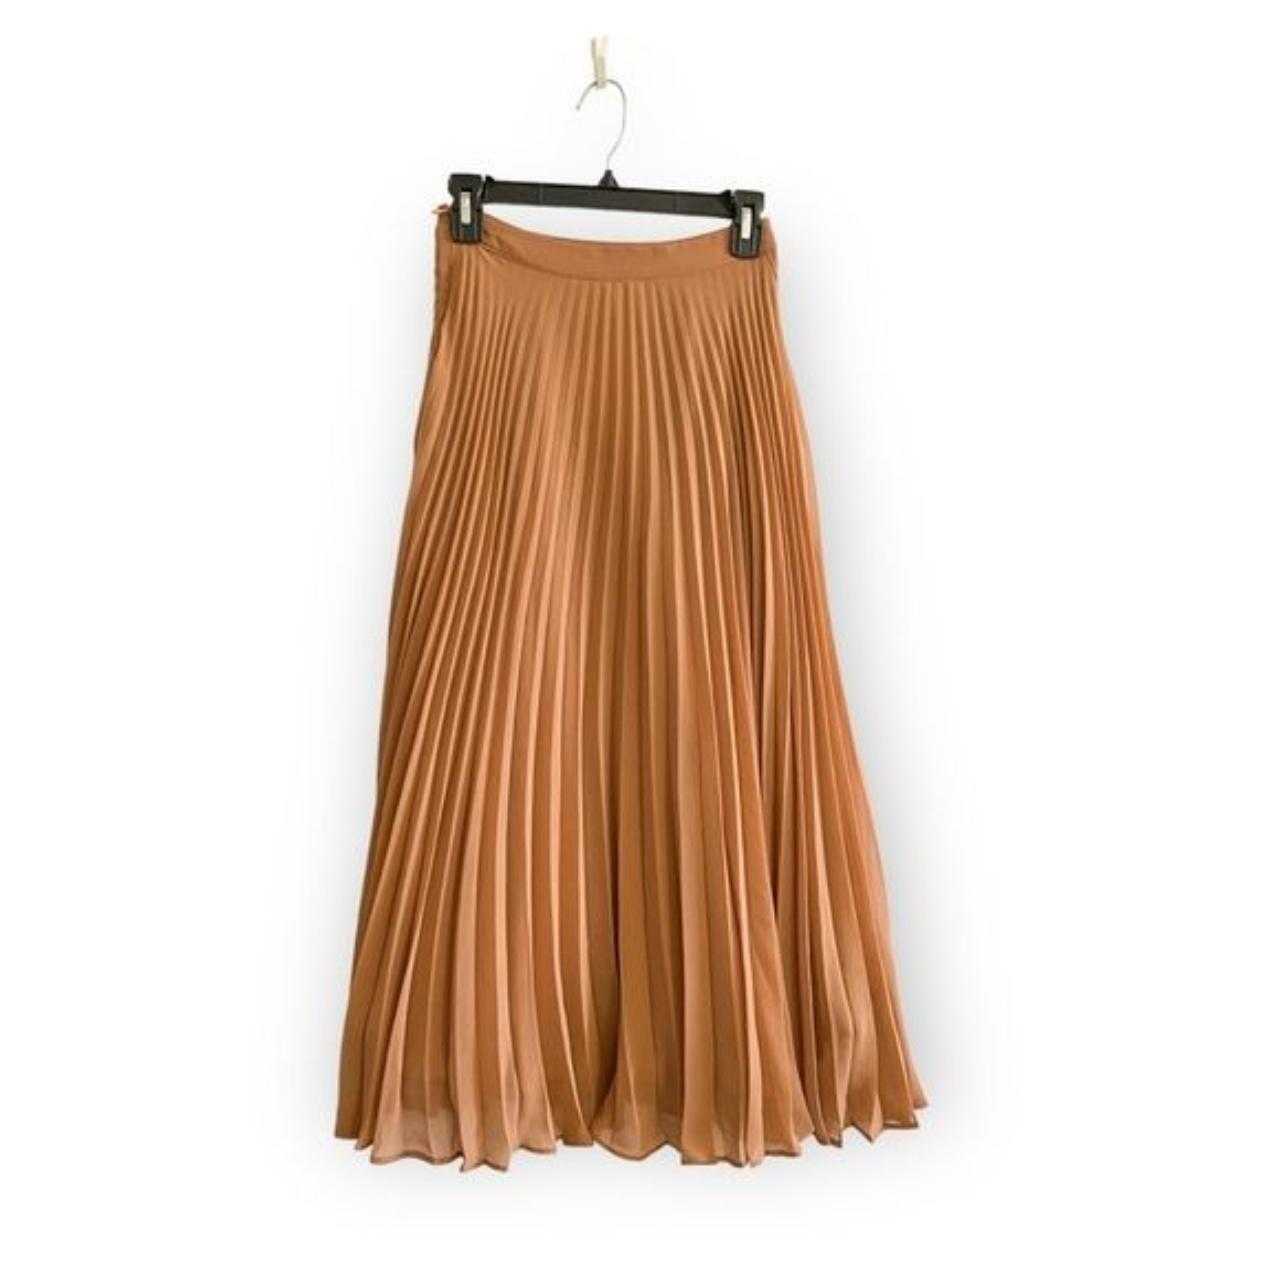 Product Image 2 - New with tag
Kookai Pleated Skirt,